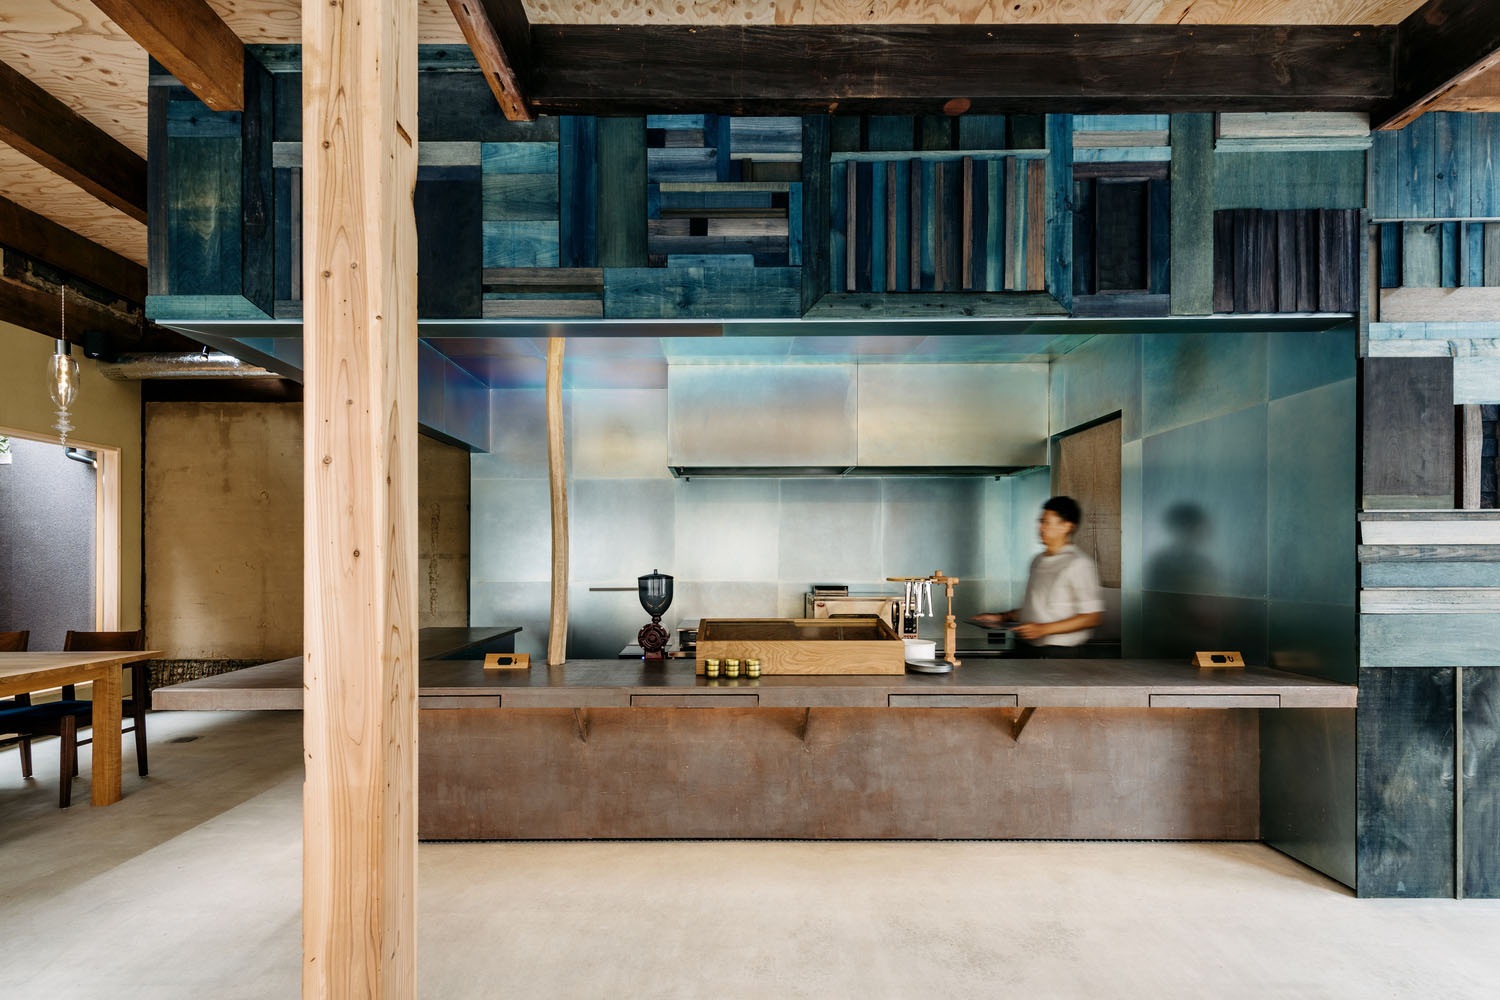 Kazuteru Matsumura Architects,日本京都,咖啡厅设计,咖啡店设计案例,国外咖啡厅设计,咖啡厅设计方案,105㎡,咖啡厅平面图,Wand Café